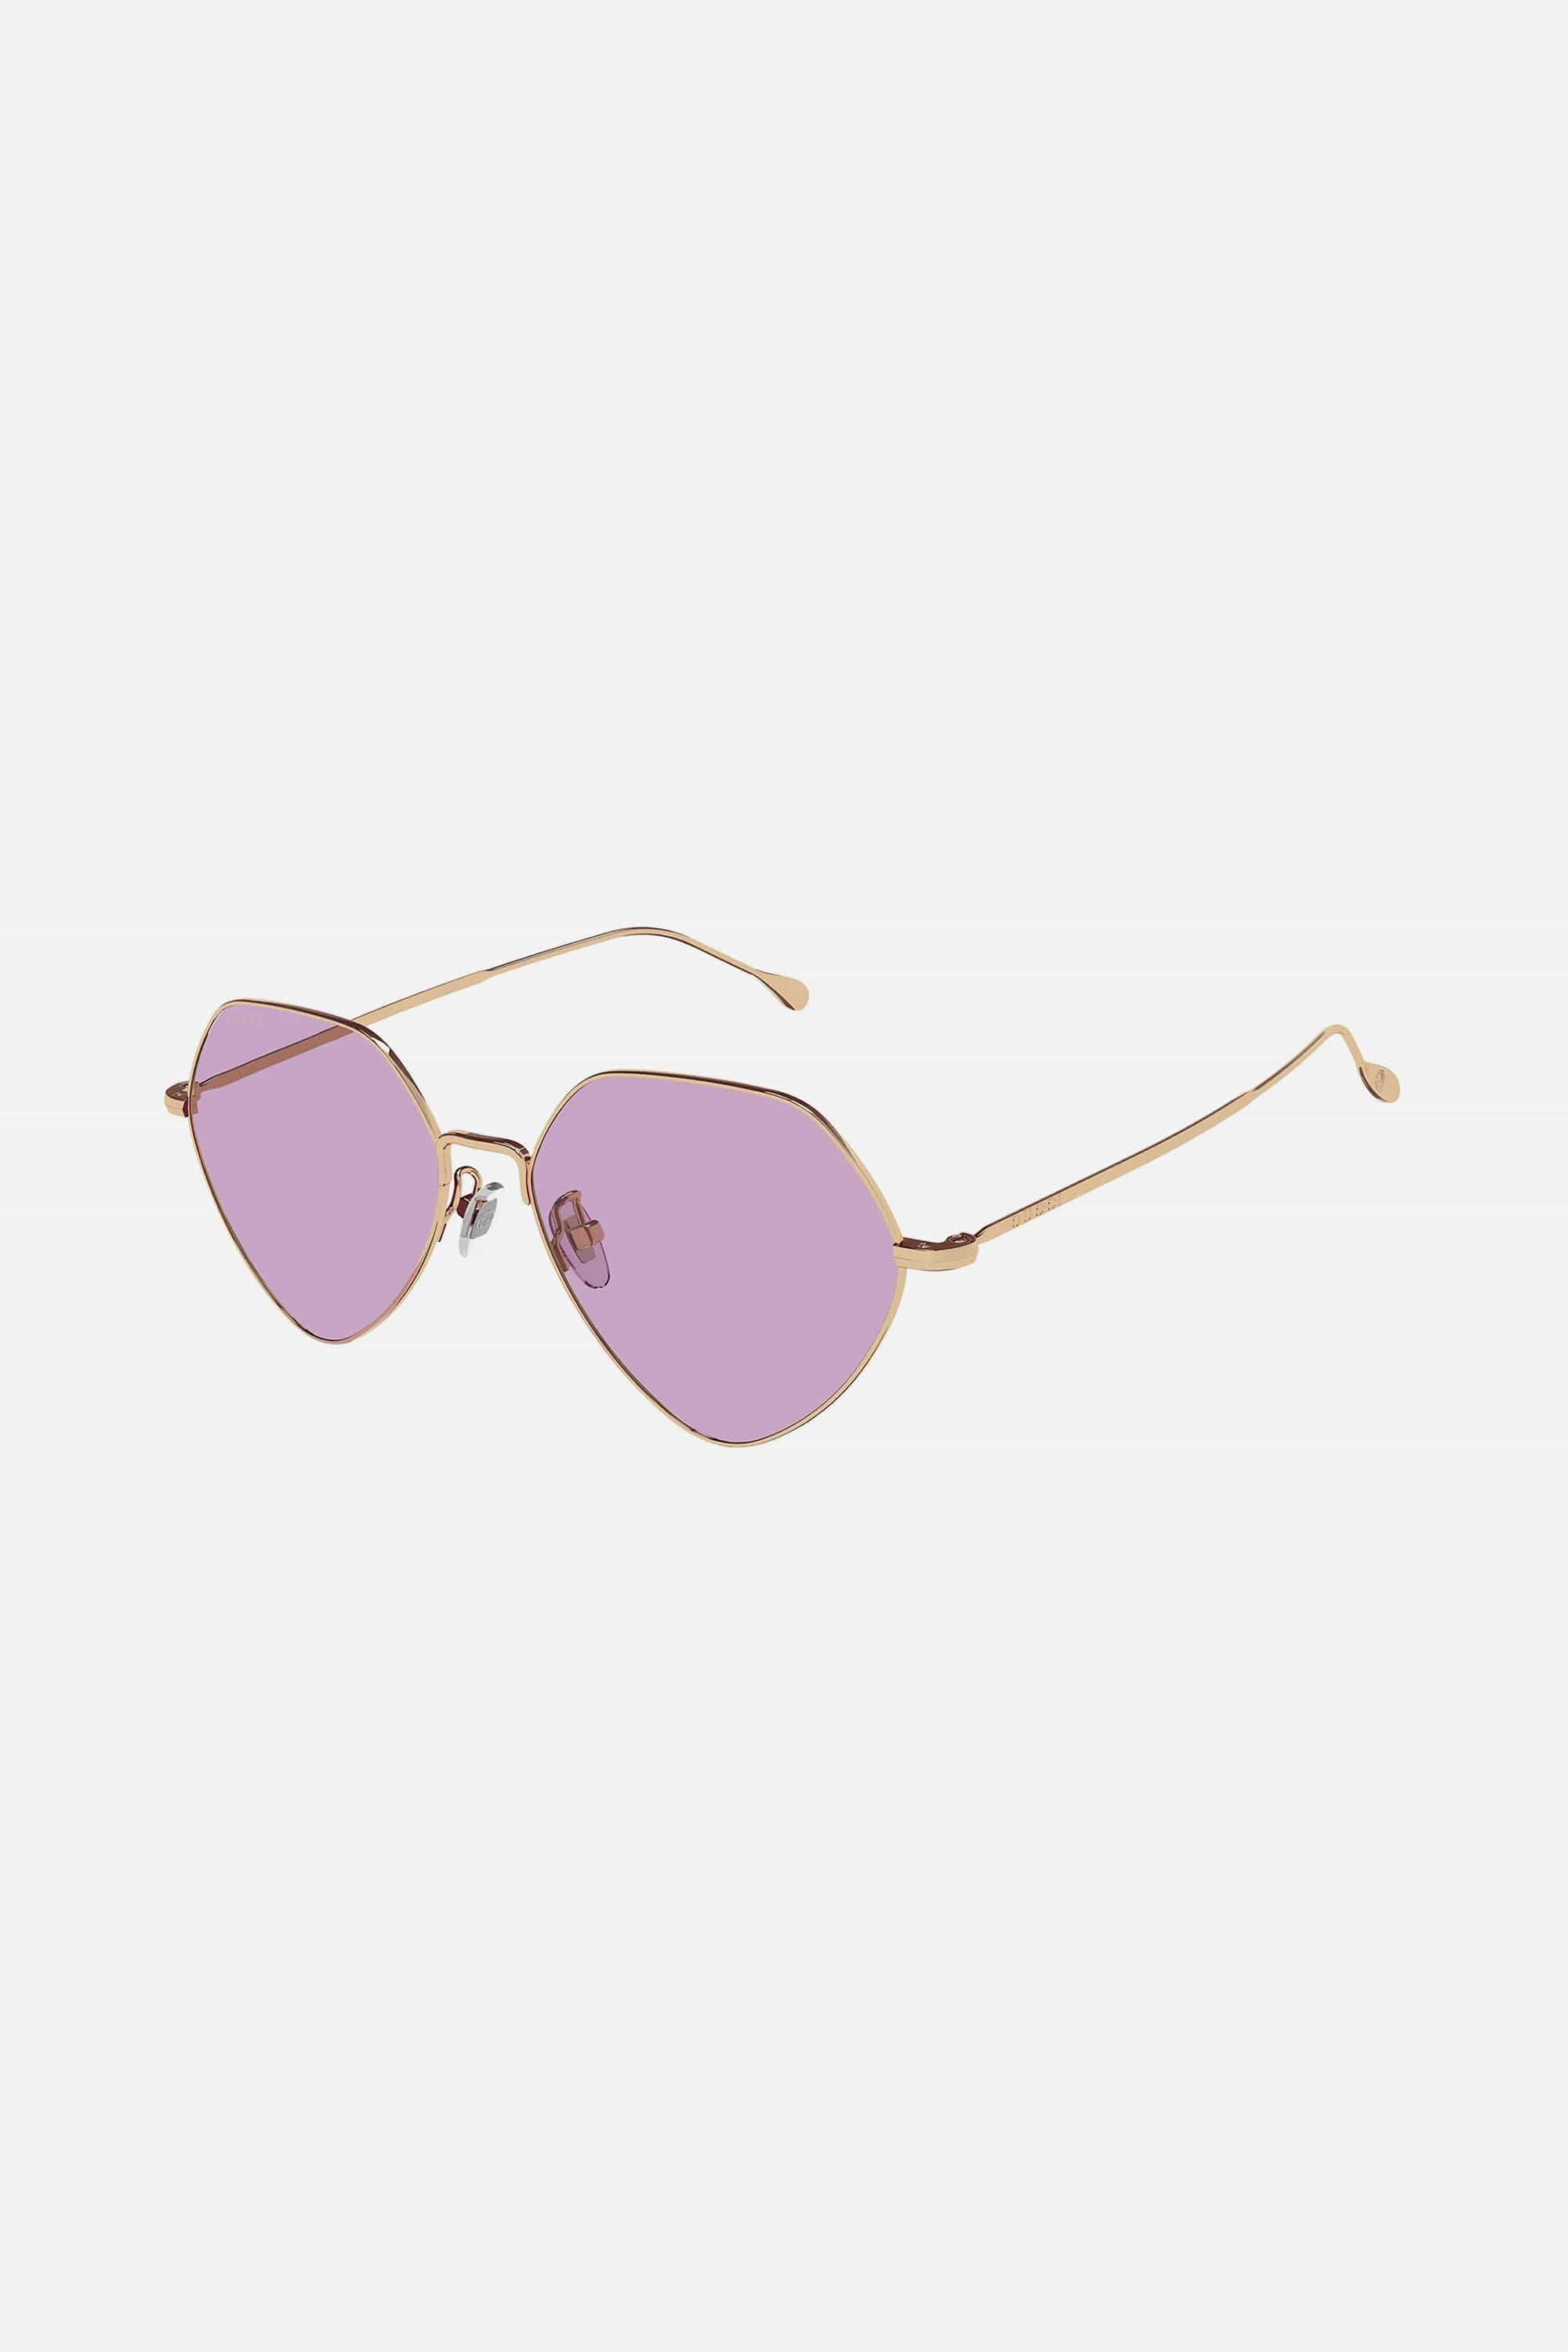 Gucci rose gold and purple lenses sunglasses - Eyewear Club